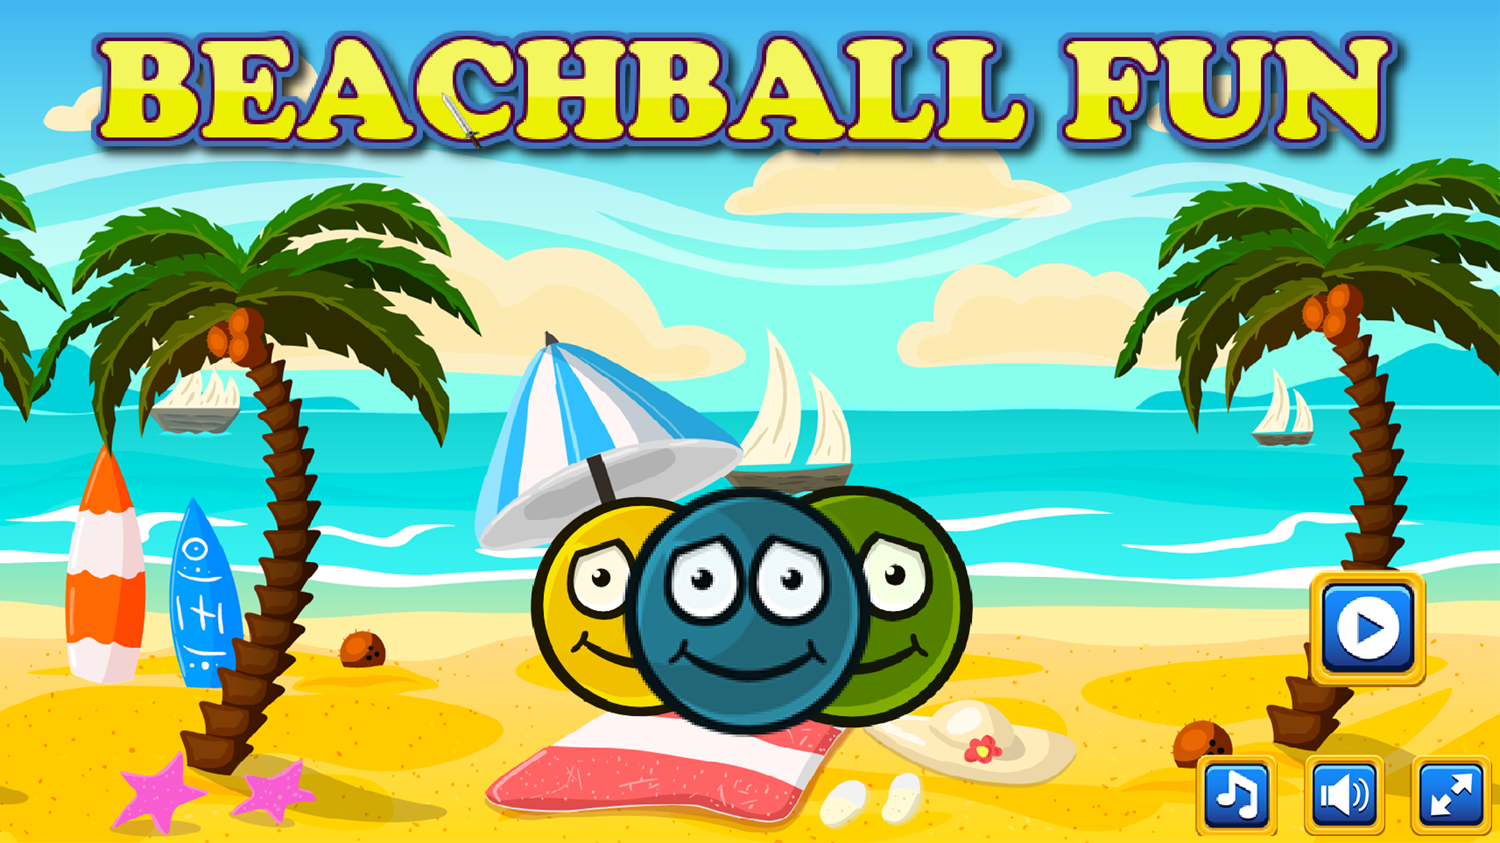 Beachball Fun Game Welcome Screen Screenshot.